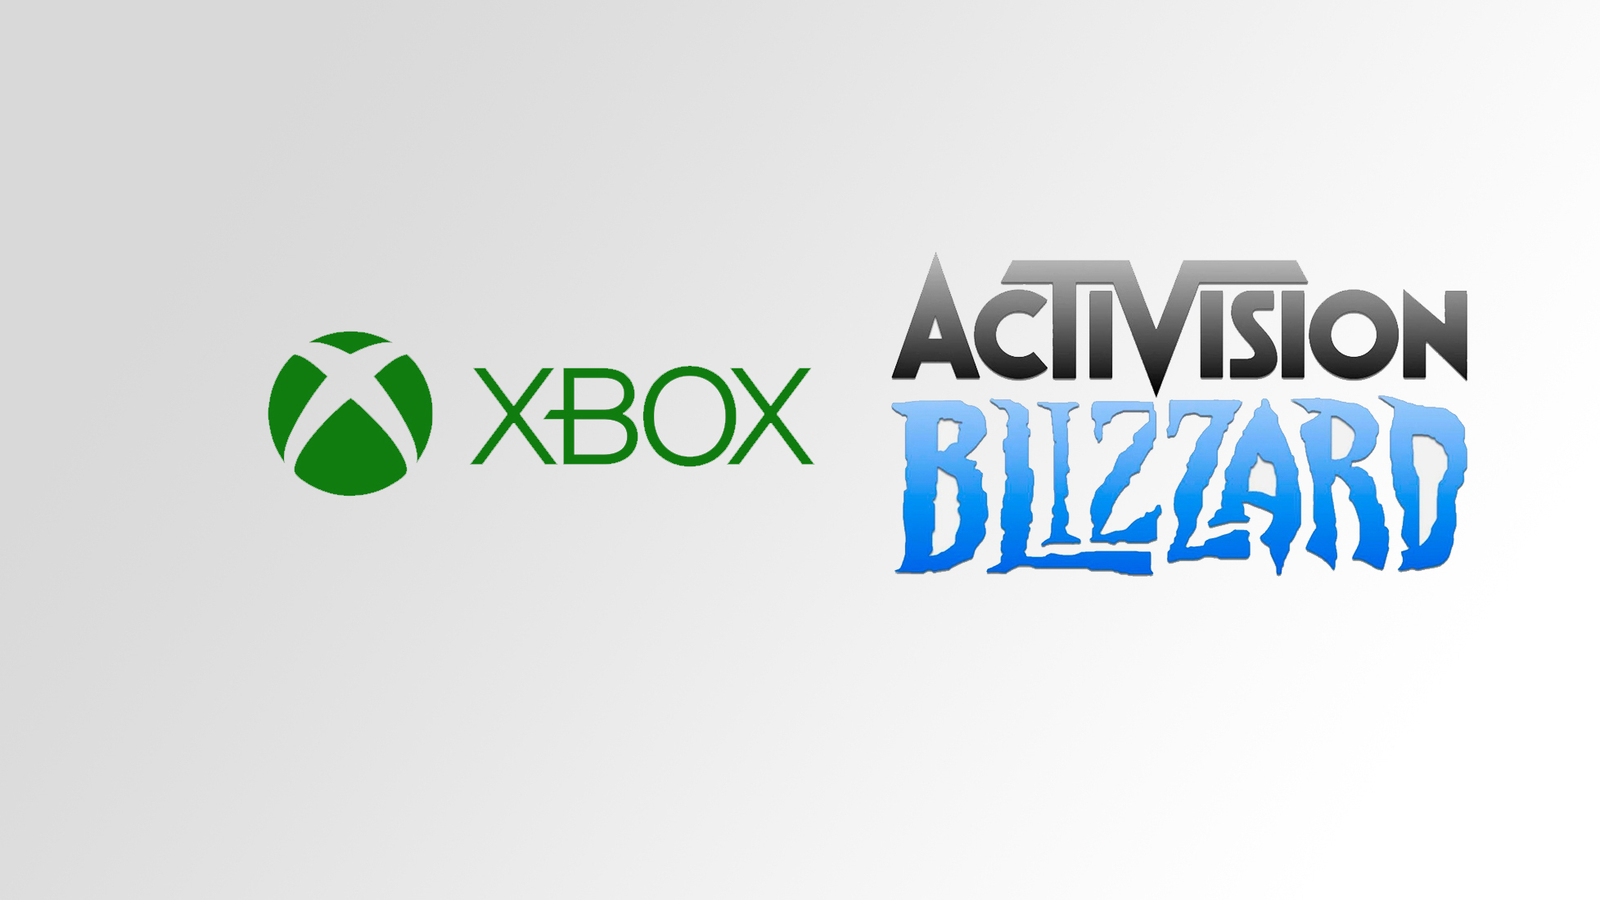 Microsoft finally buy Activision Blizzard as last legal hurdles